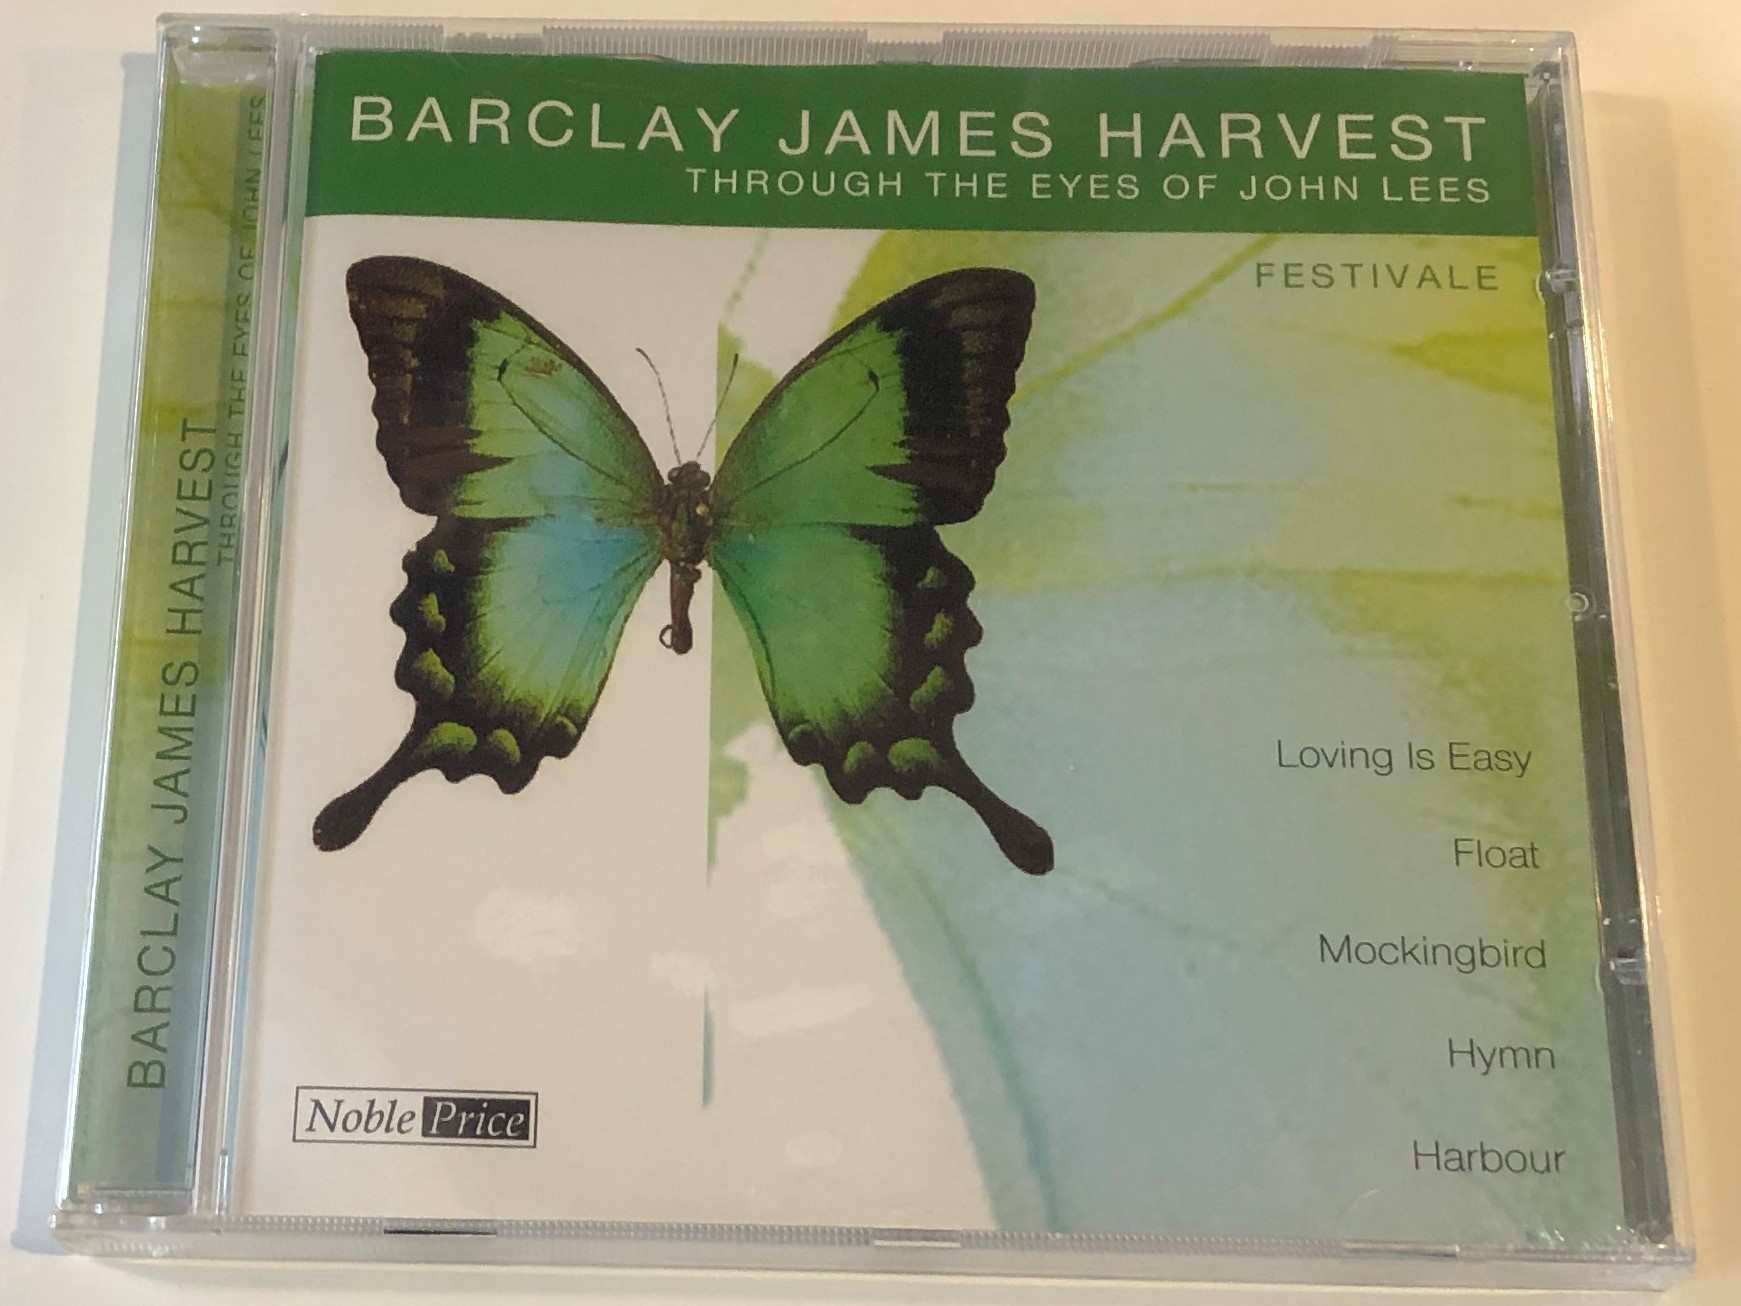 barclay-james-harvest-through-the-eyes-of-john-lees-festivale-loving-is-easy-float-mockingbird-hymn-herbour-documents-audio-cd-2002-220781-205-1-.jpg